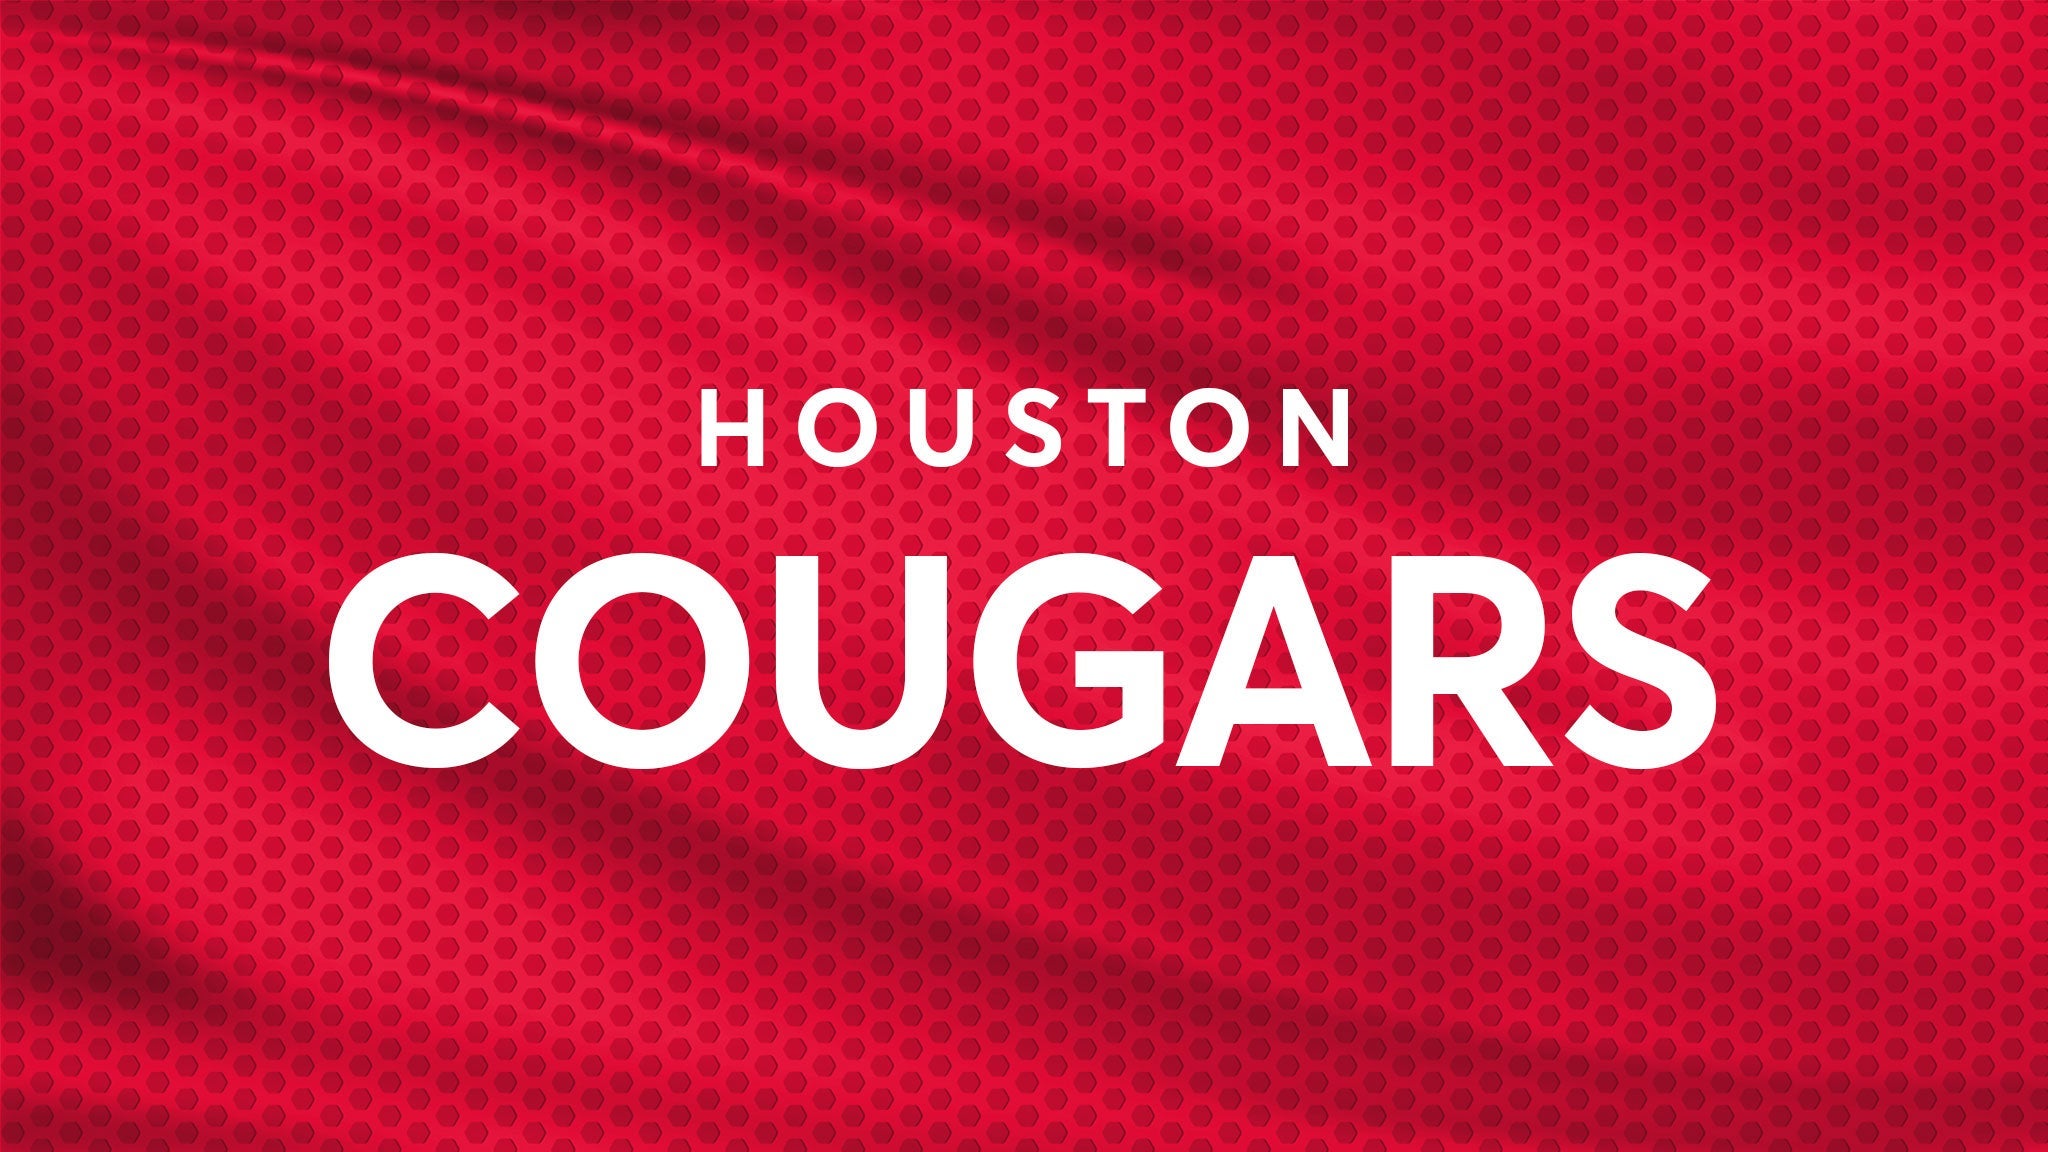 Houston Cougars Football vs. UNLV Rebels Football